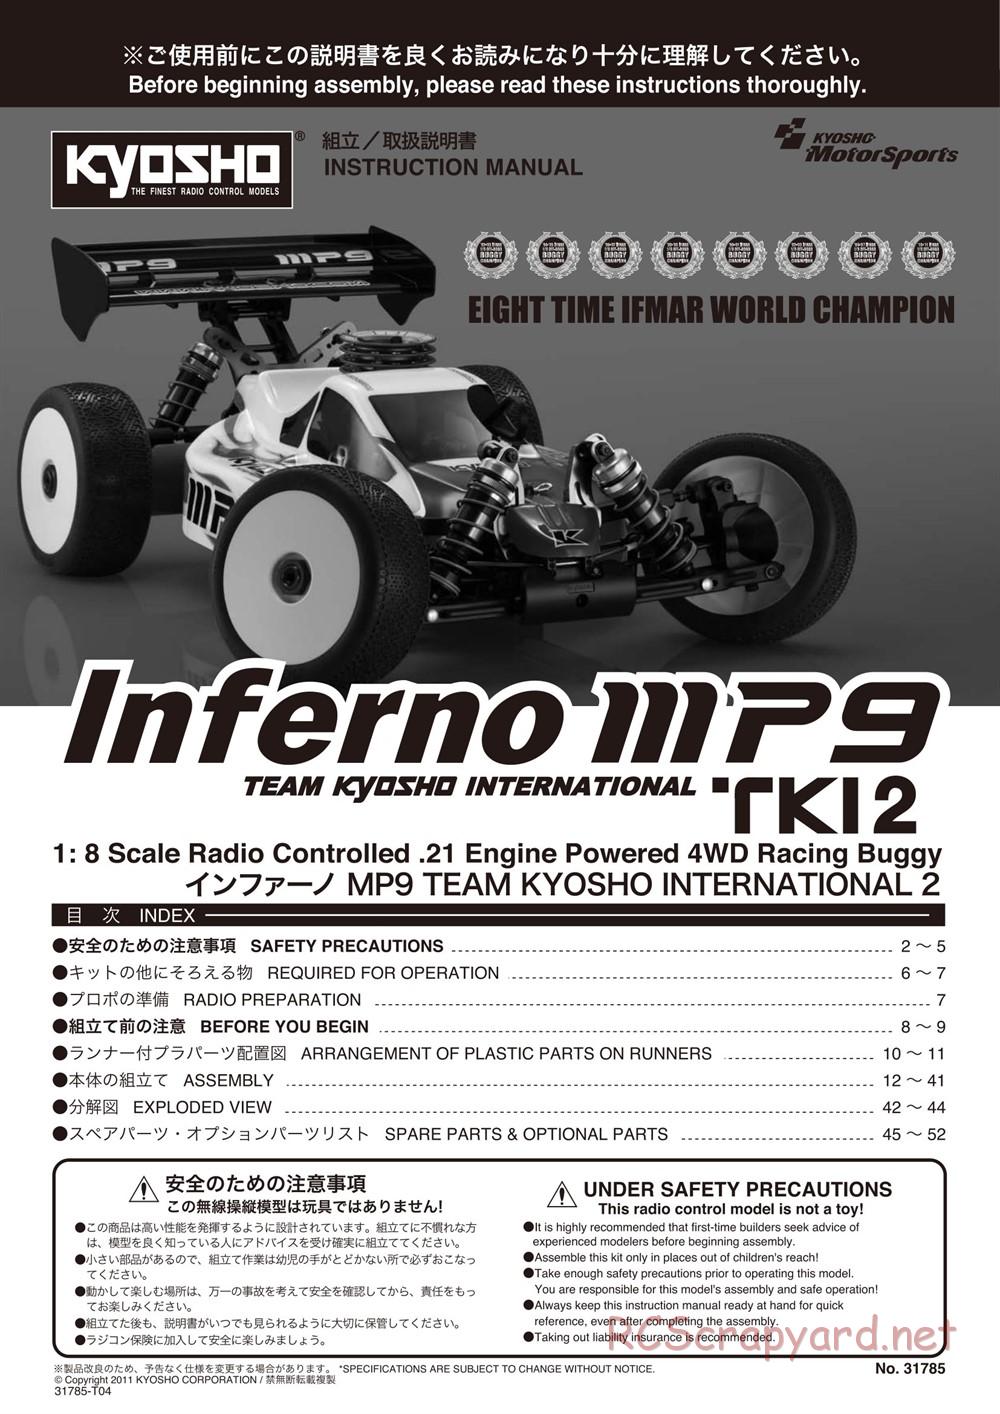 Kyosho - Inferno MP9 TKI2 - Manual - Page 1